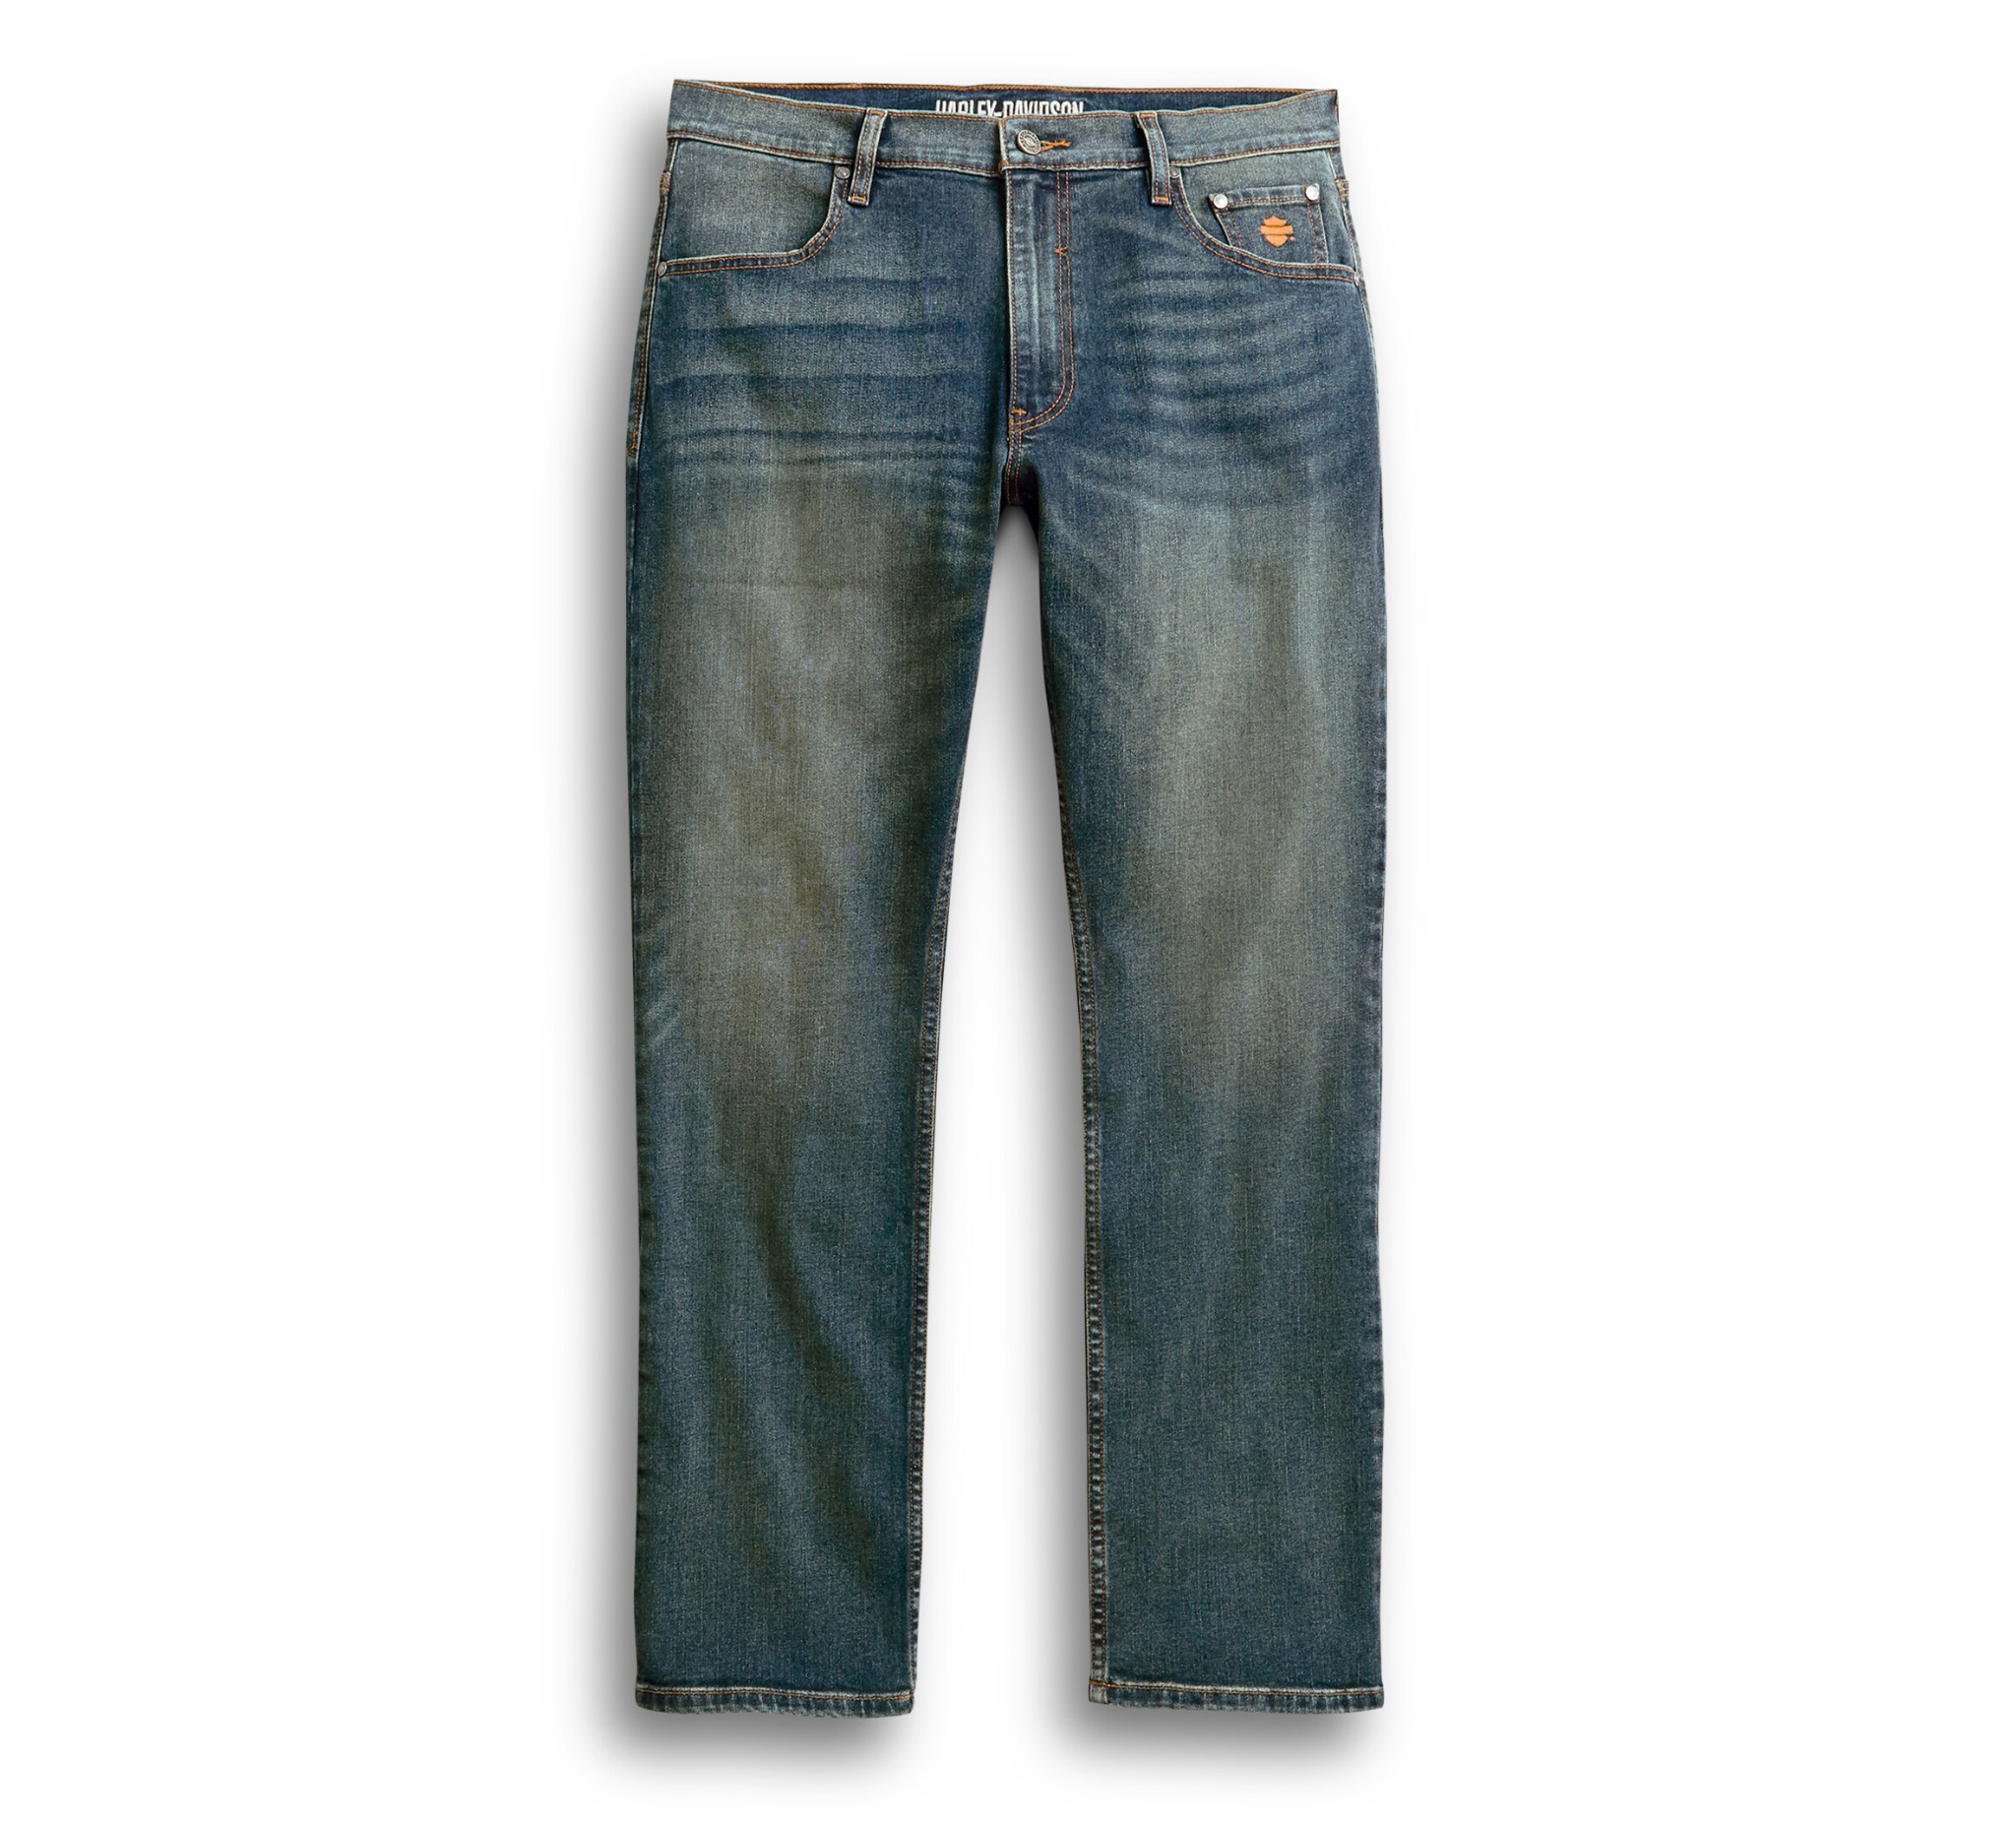 harley davidson motorcycle jeans